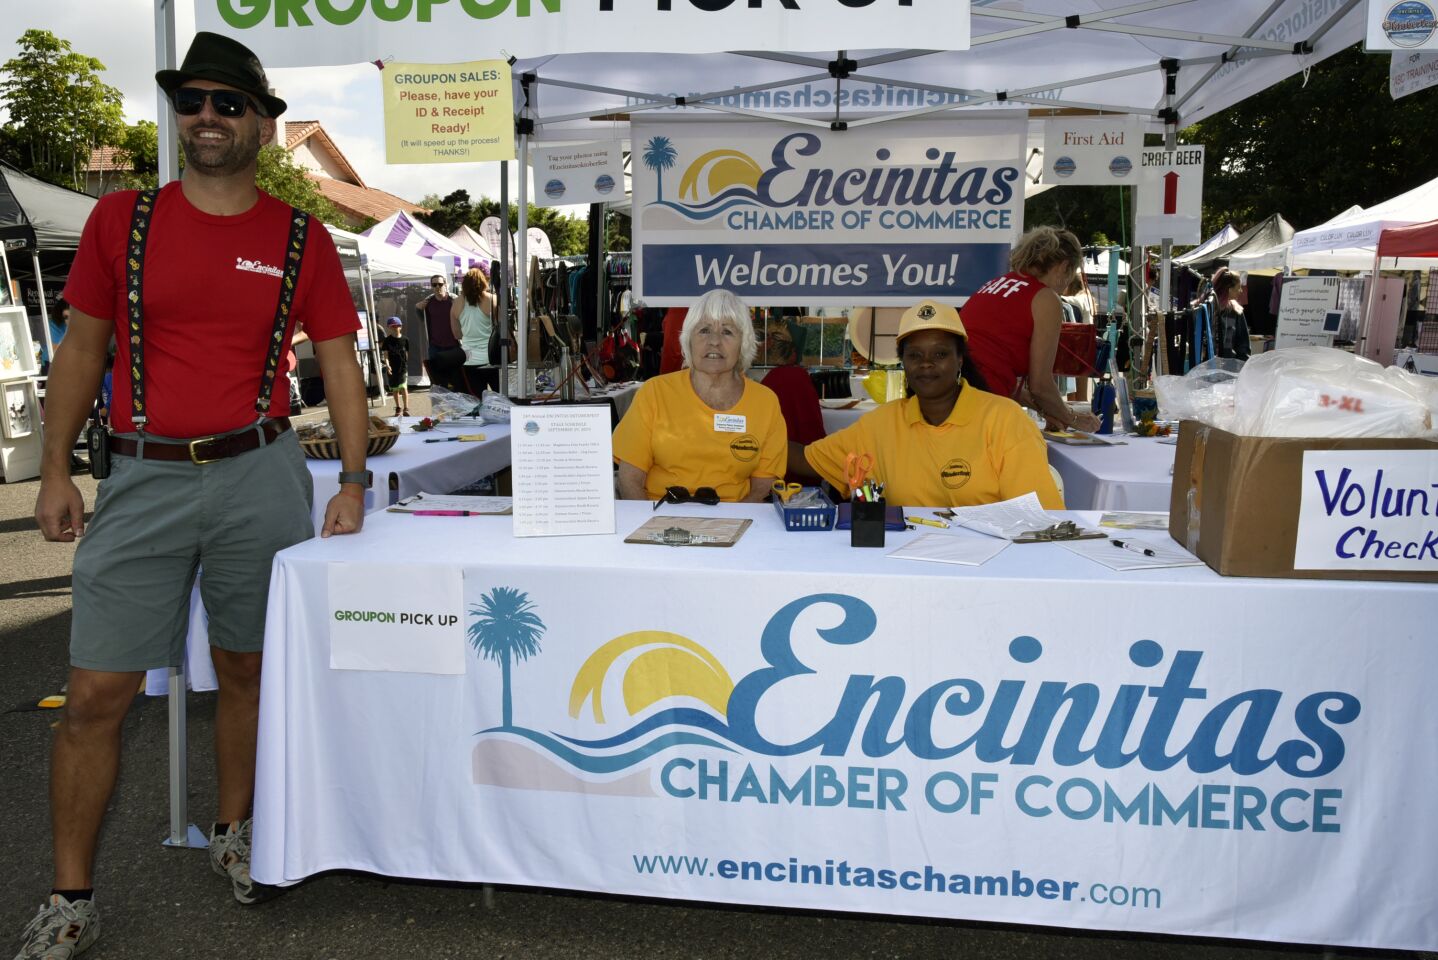 Encinitas Chamber of Commerce board members Jon Kochik and Suzanne Perez-Swanson, Encinitas Lion’s volunteer Rachel White